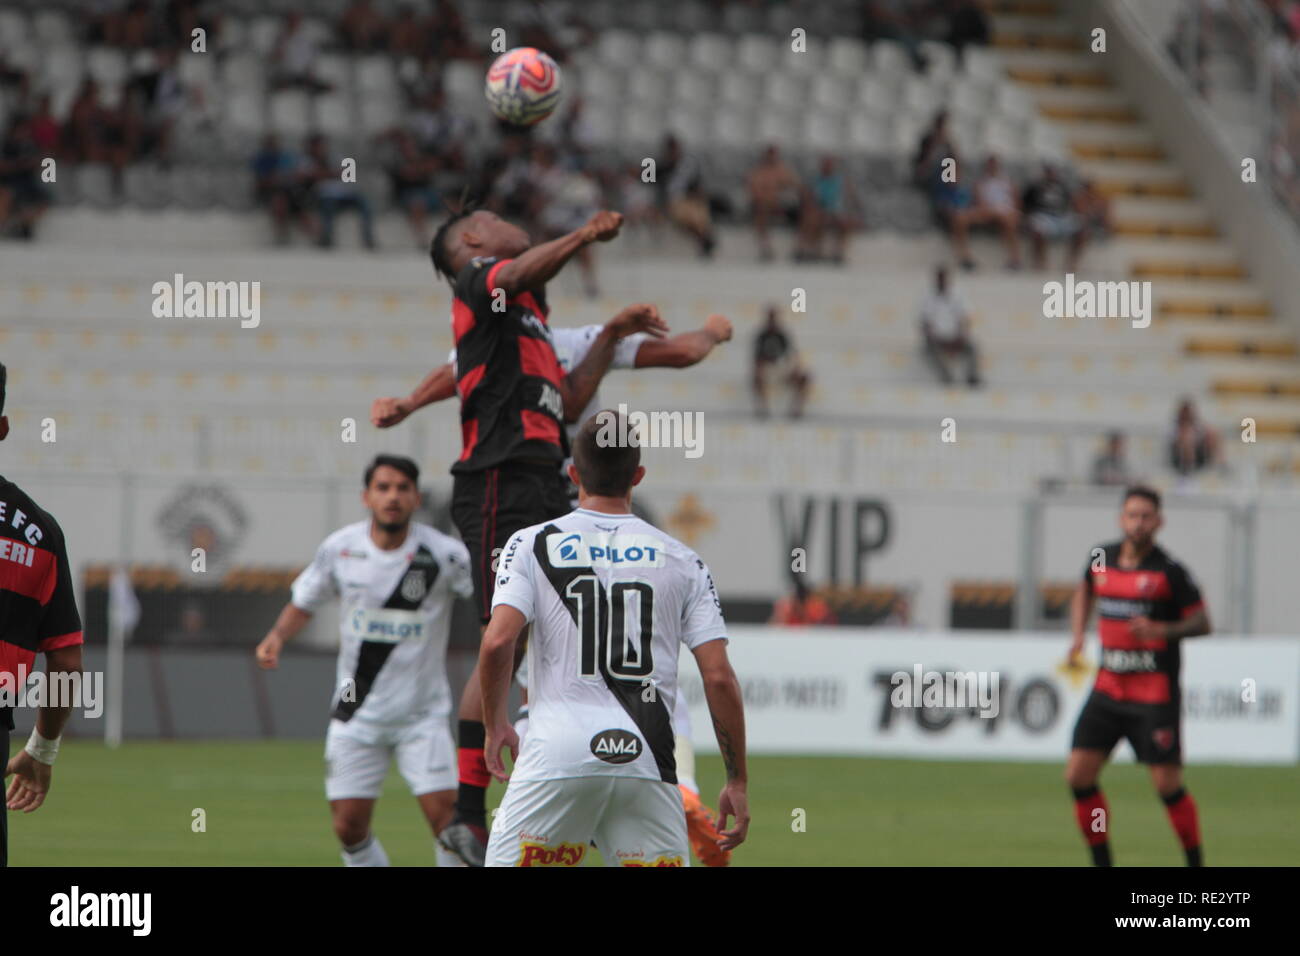 SP - Campinas - 19/01/2019 - Ponte Preta x Oeste Paulista 2019 - Game between Ponte Preta and West Photo: Rodrigo Zanotto / AGIF Credit: AGIF/Alamy Live News Stock Photo